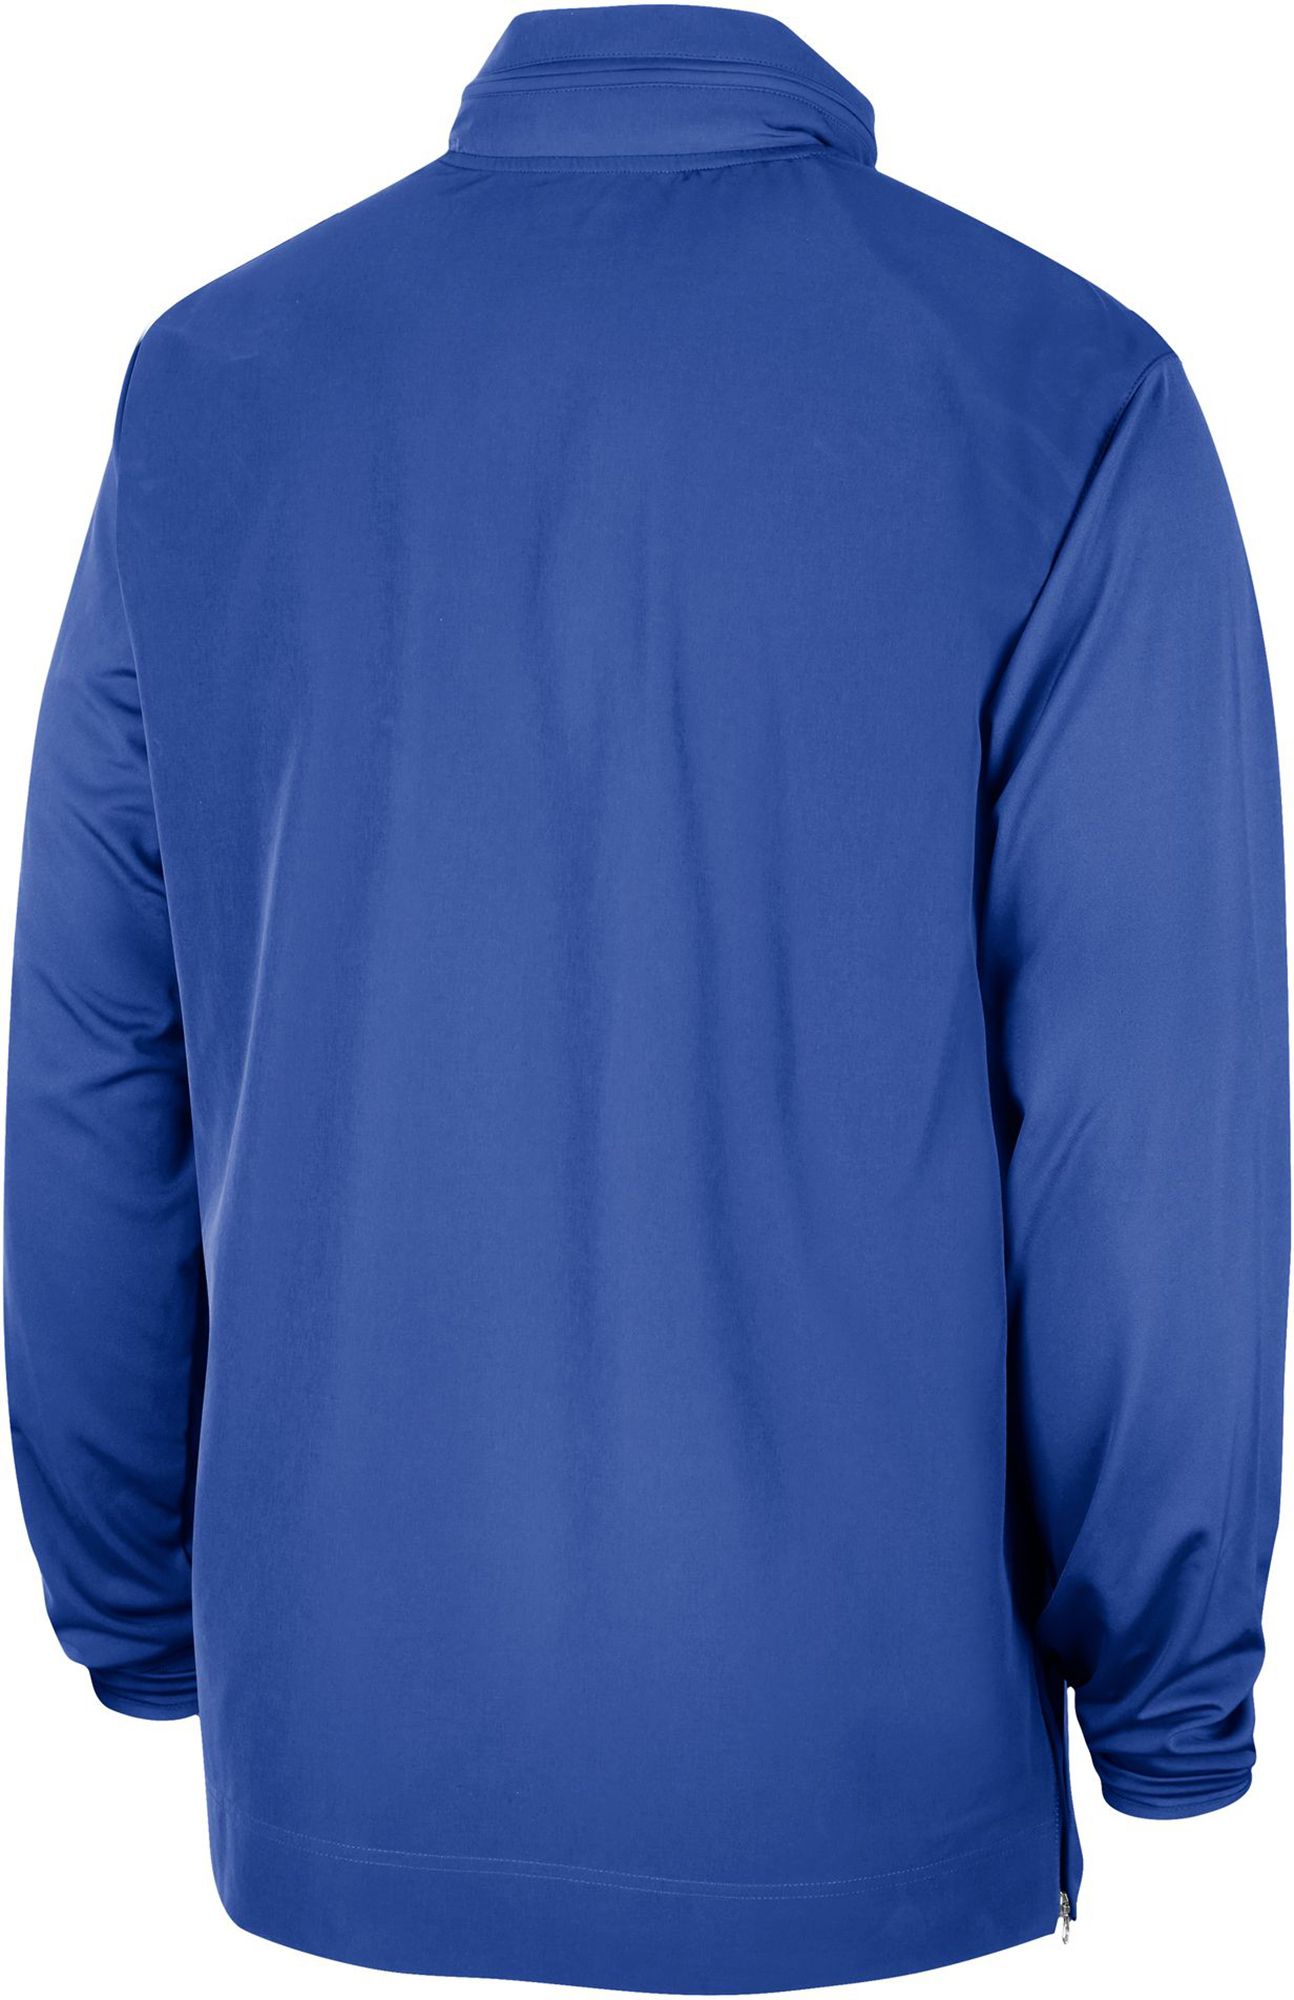 Nike Men's Florida Gators Blue Lightweight Football Coach's Jacket